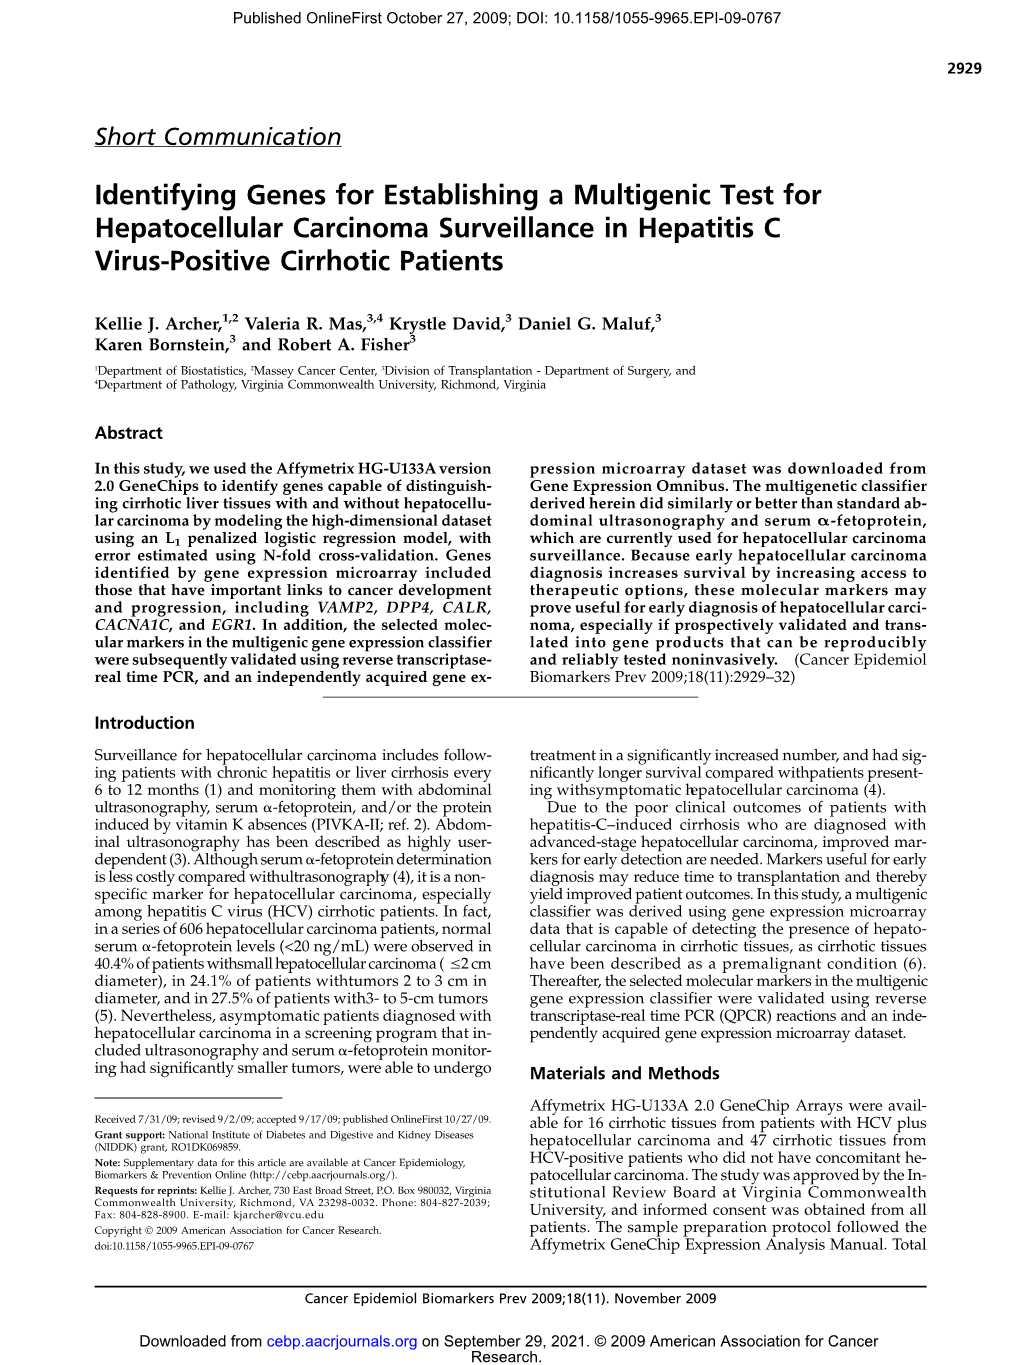 Identifying Genes for Establishing a Multigenic Test for Hepatocellular Carcinoma Surveillance in Hepatitis C Virus-Positive Cirrhotic Patients